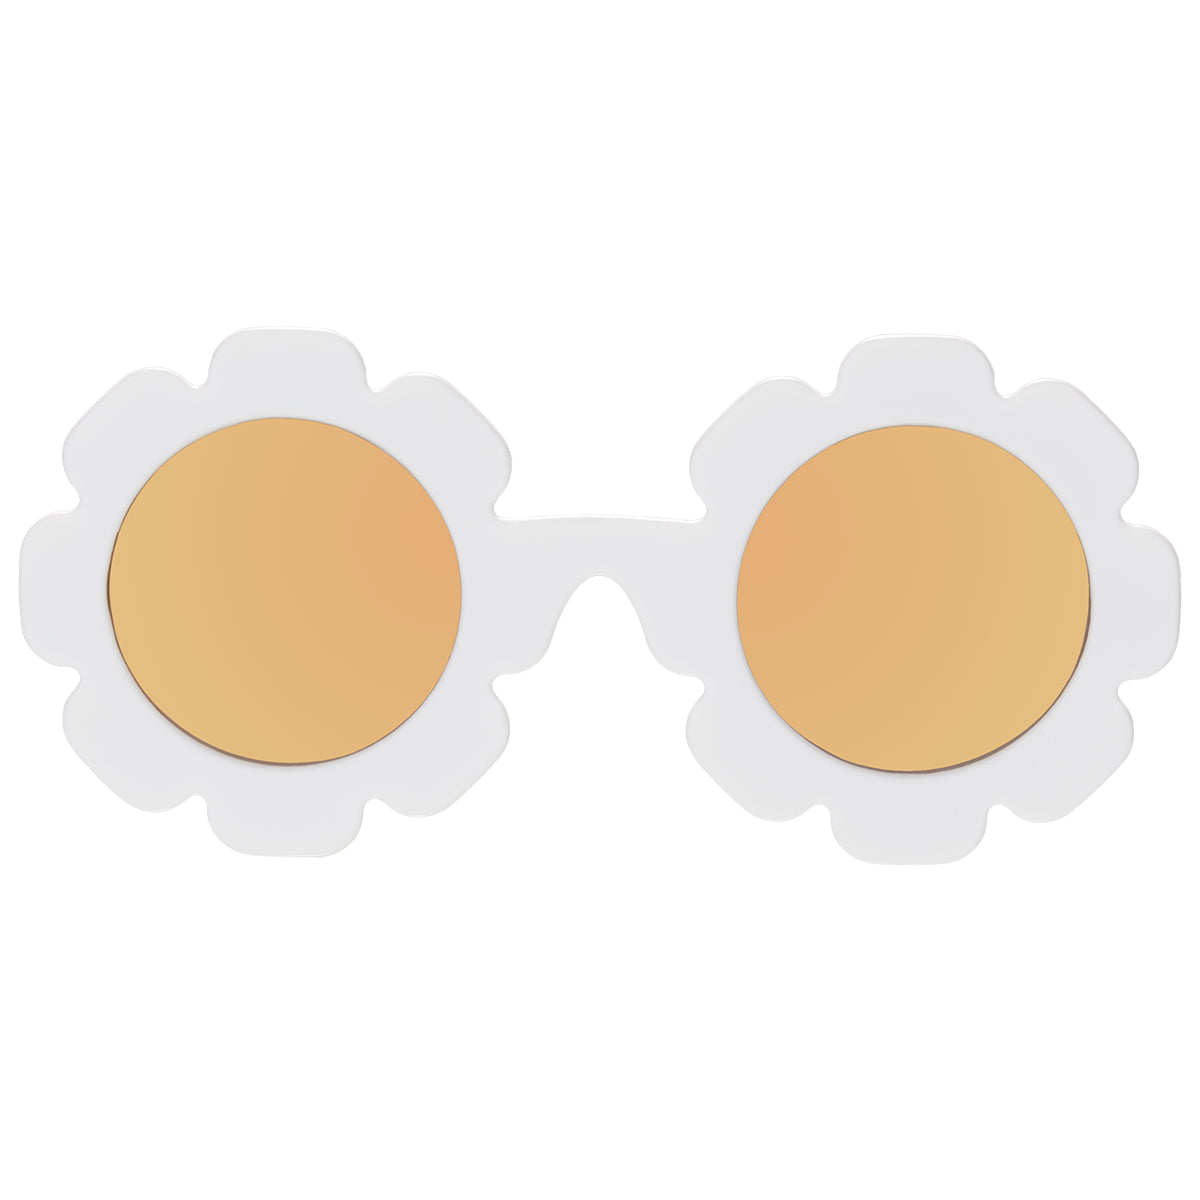 Babiators Sunglasses - The Flower Child 3-5Y